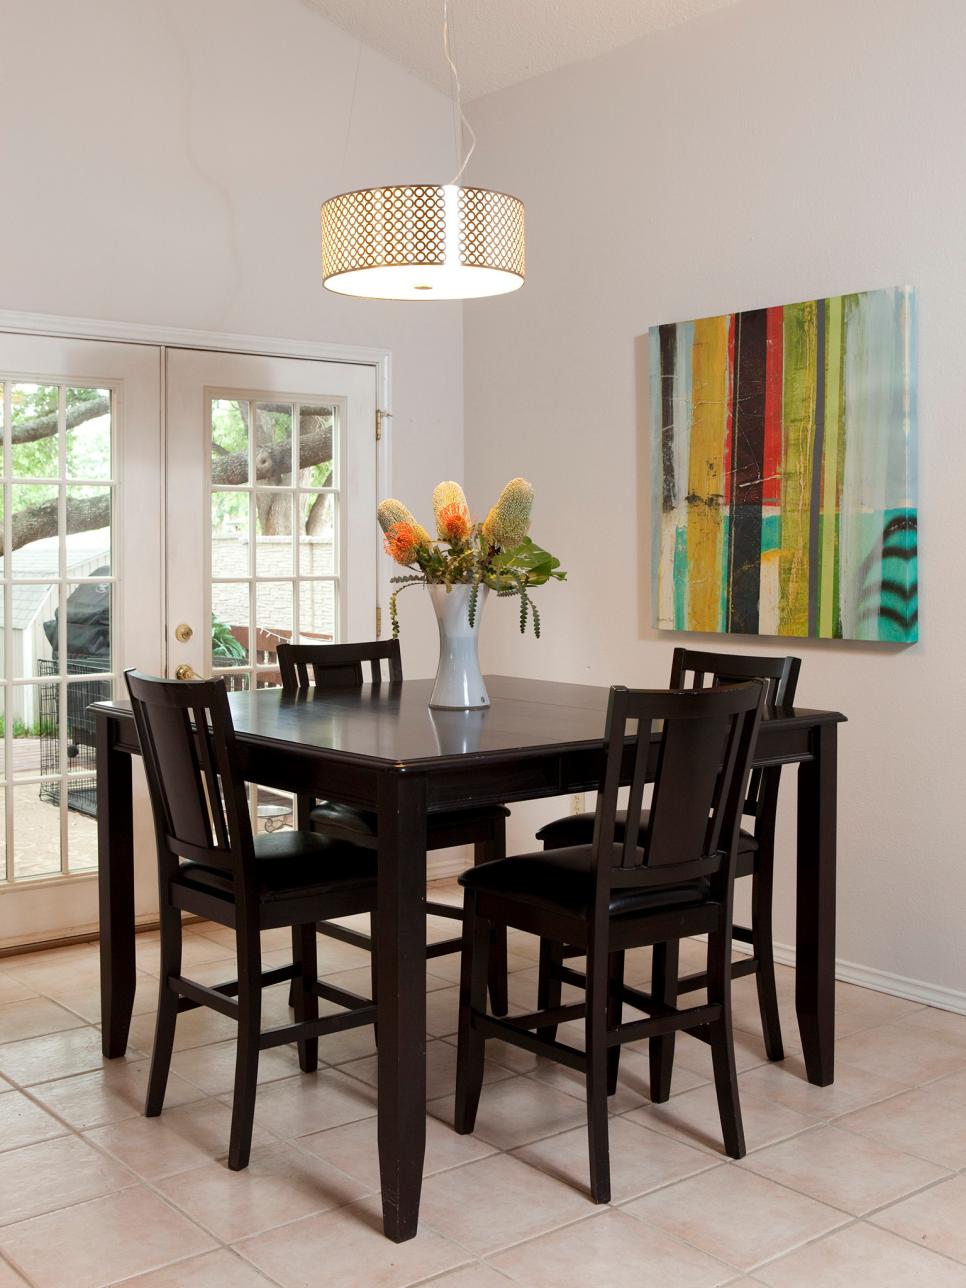 Small Dining Area With Drum Pendant Light | HGTV